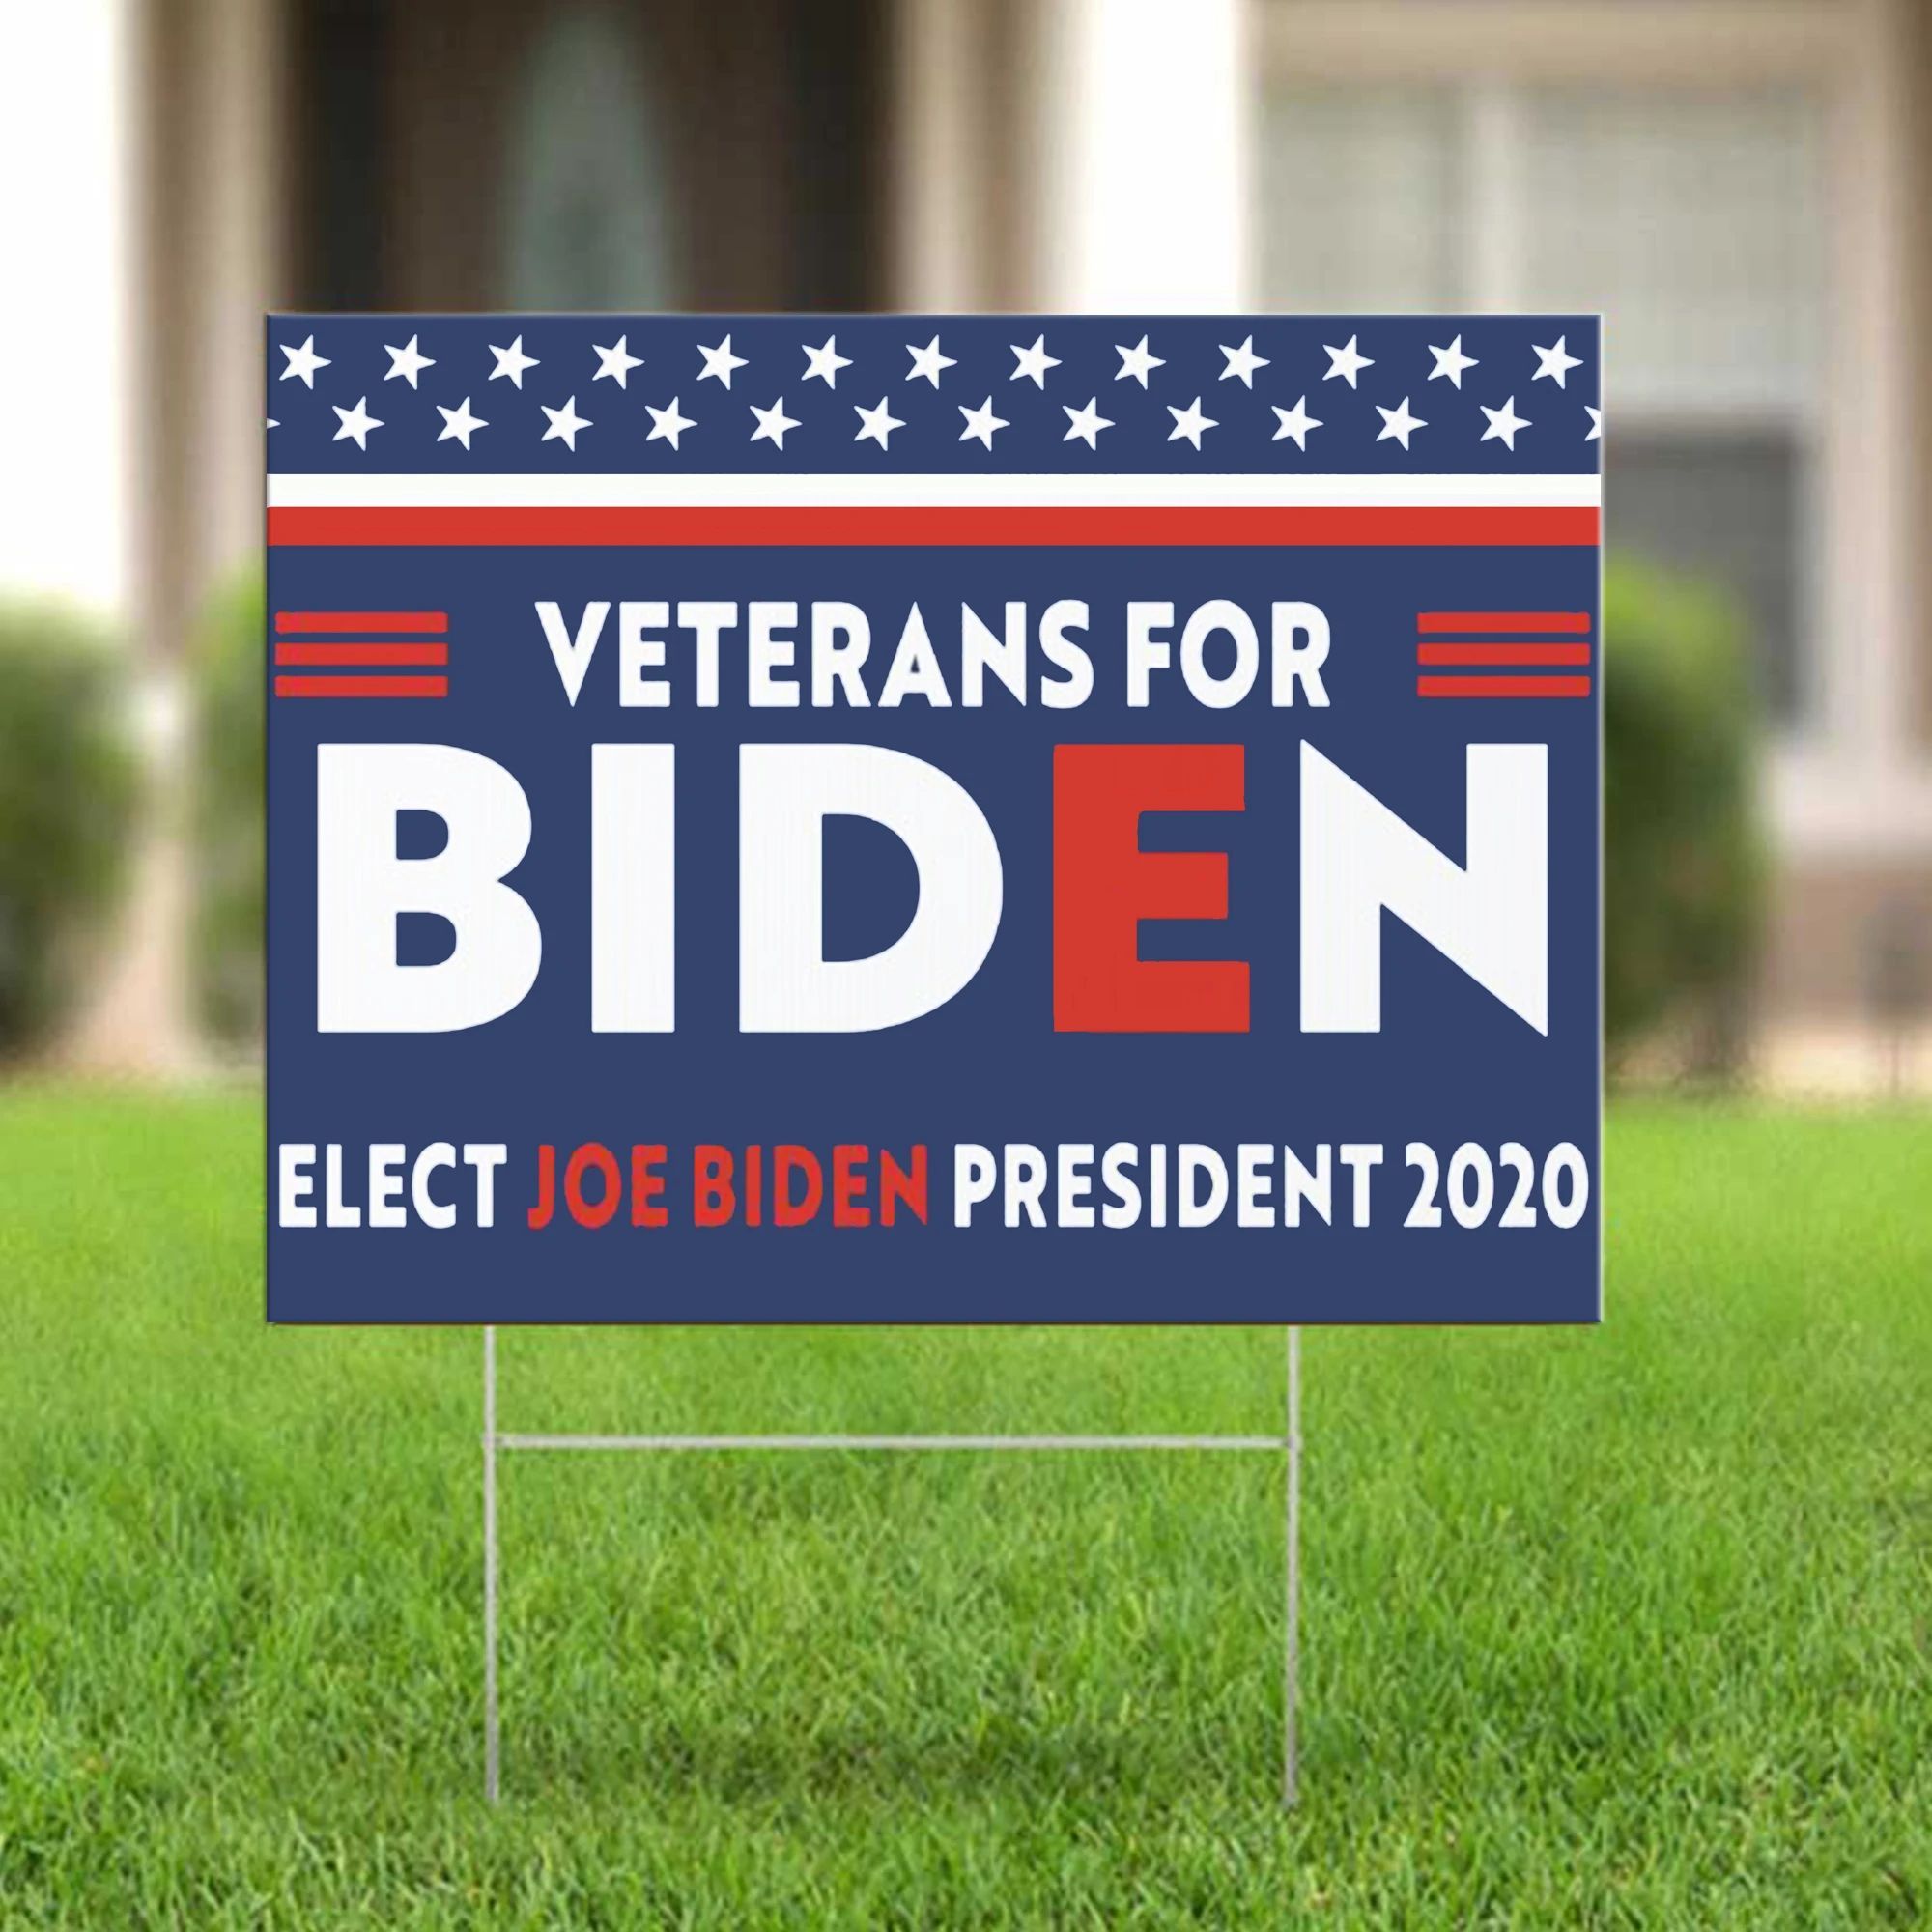 Veterans For Biden Elect Joe Biden President Yard Sign Vote Pro Biden Campaign Running Election